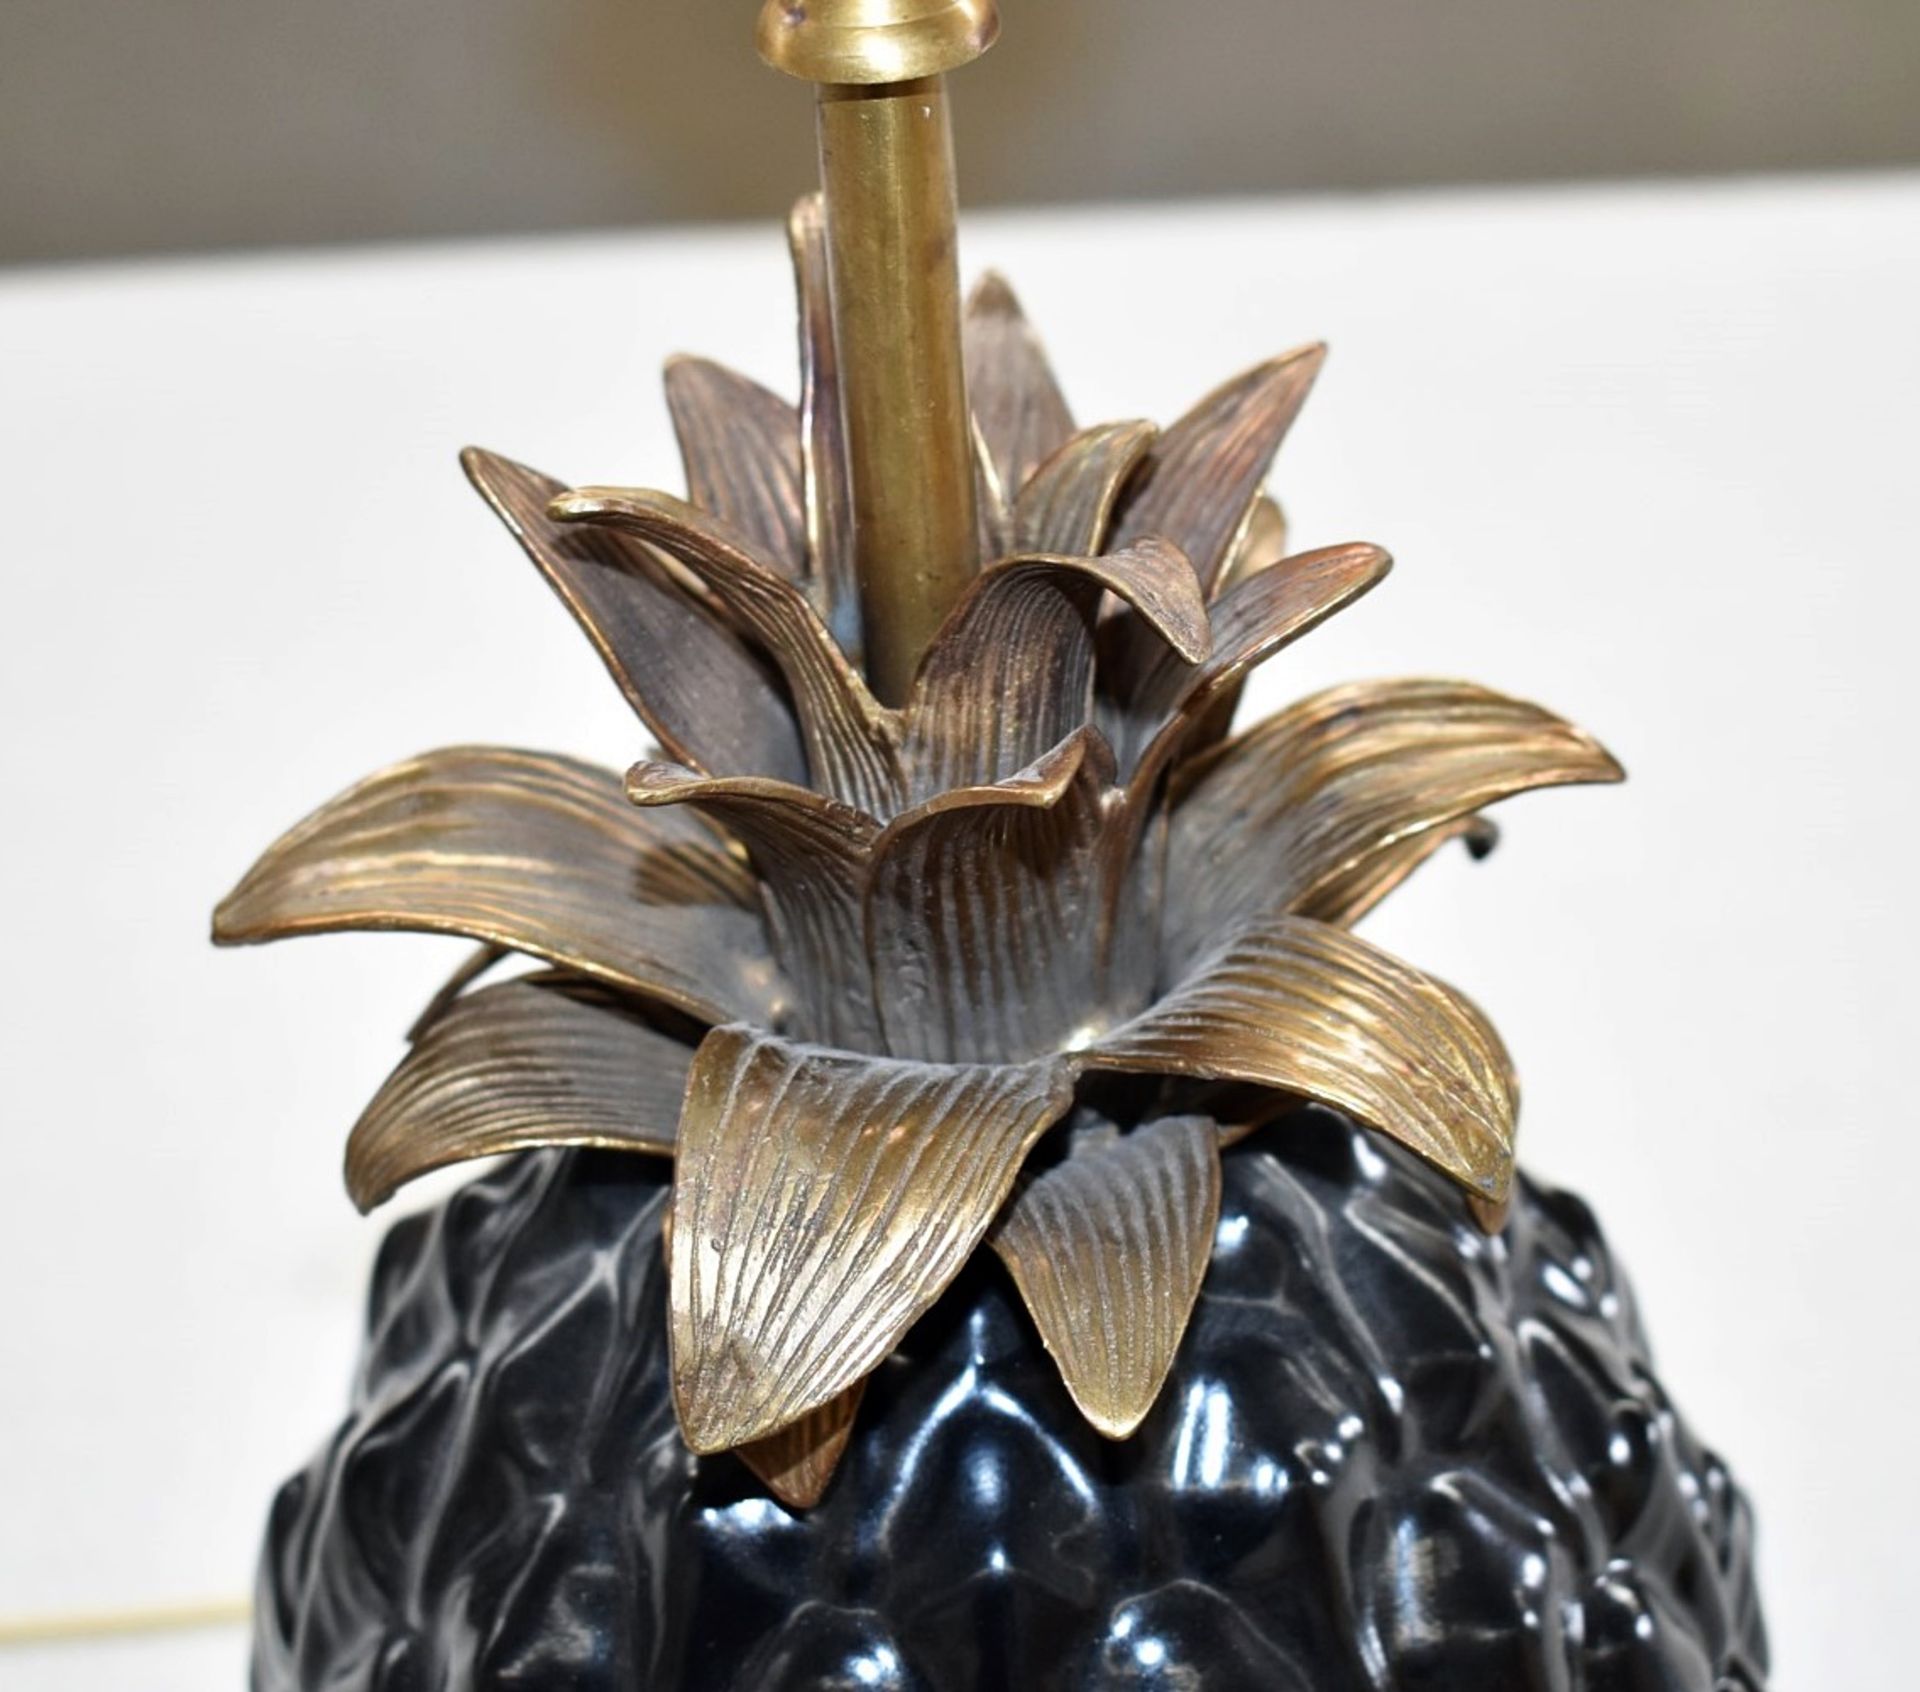 1 x HOUSE OF HACKNEY 'Ananas' Ceramic Pineapple Lamp Stand In Black - Original RRP £545.00 - Image 5 of 8